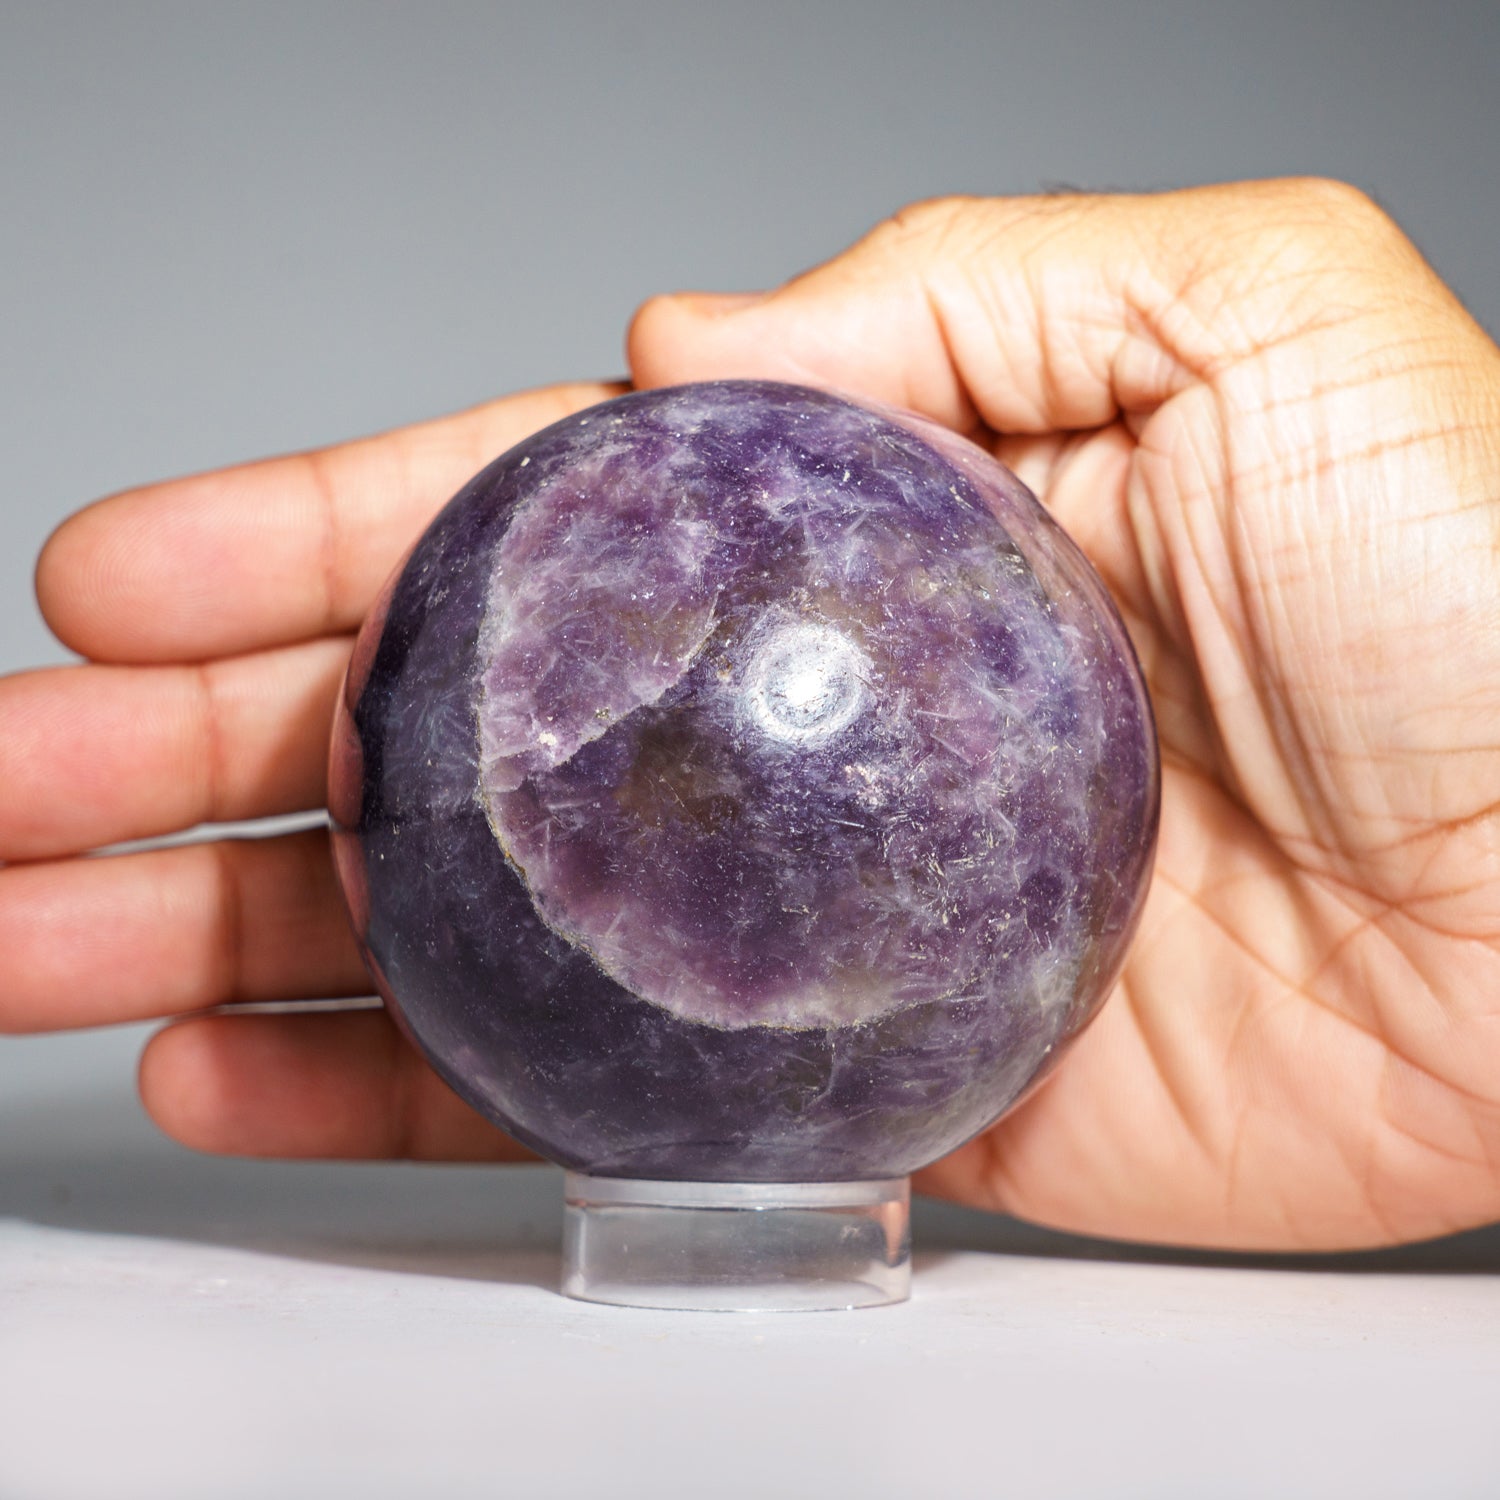 Genuine Polished Gemmy Amethyst Sphere from Brazil (2.5", 1.35 lbs)